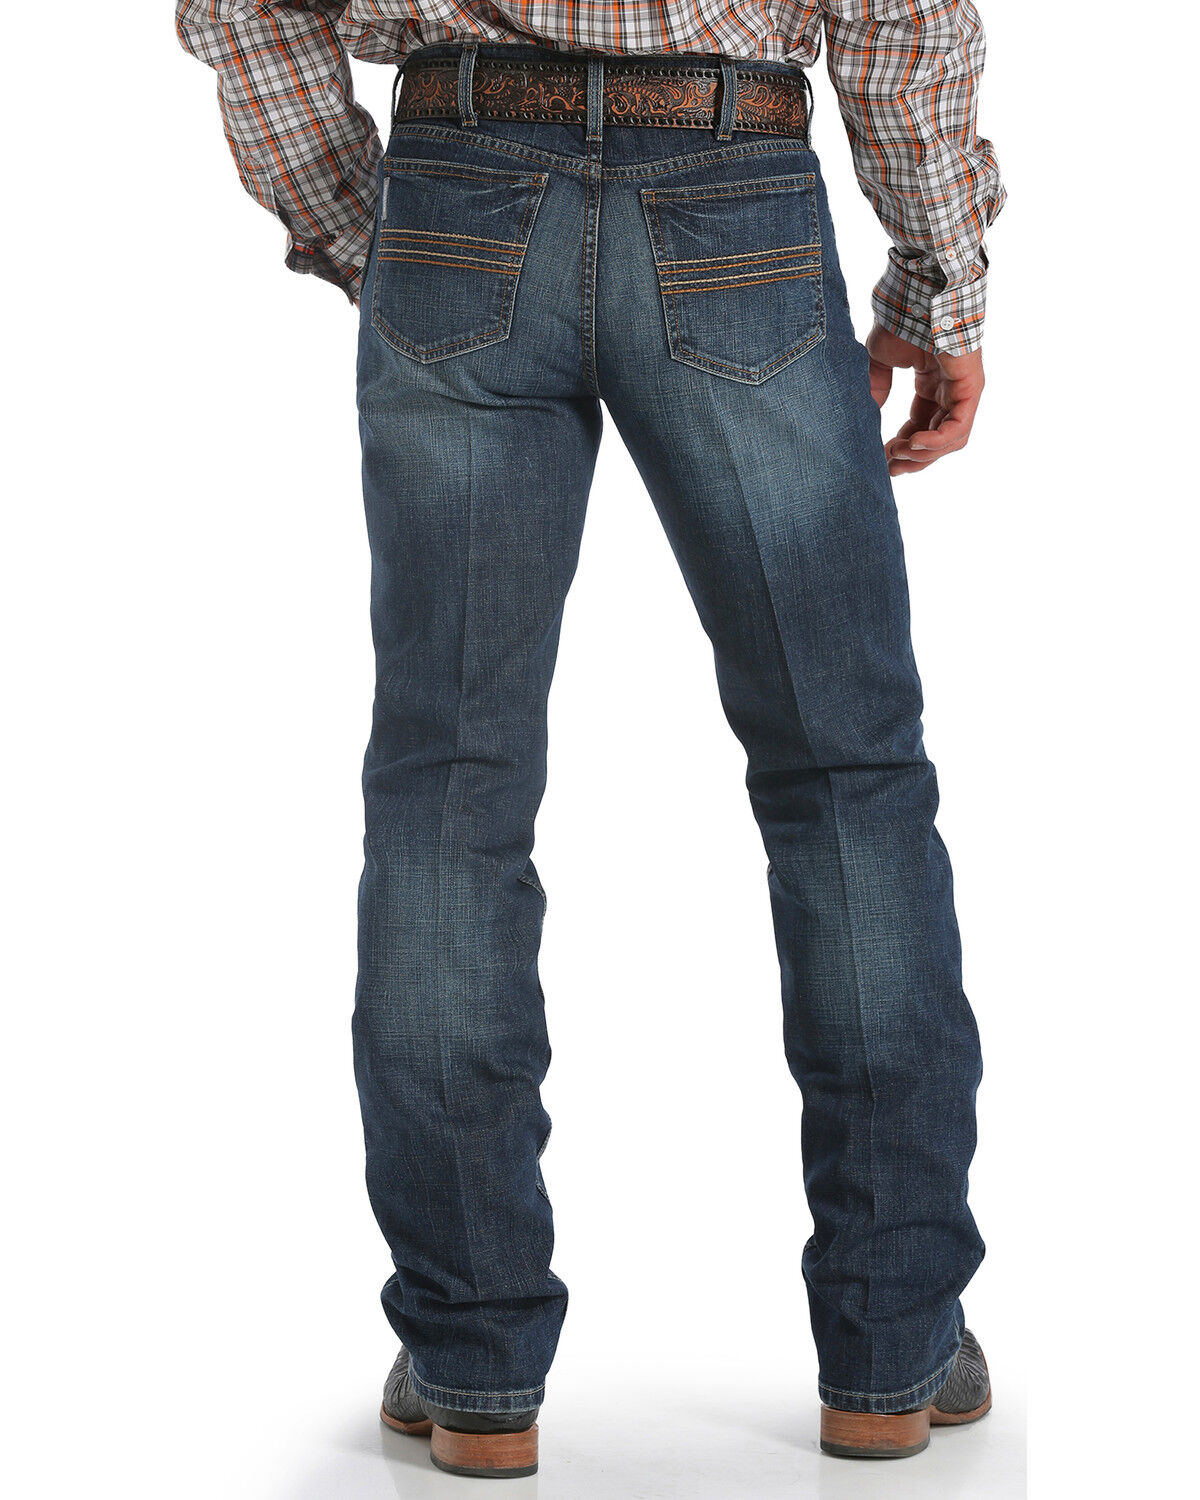 Cinch Jeans Size Chart